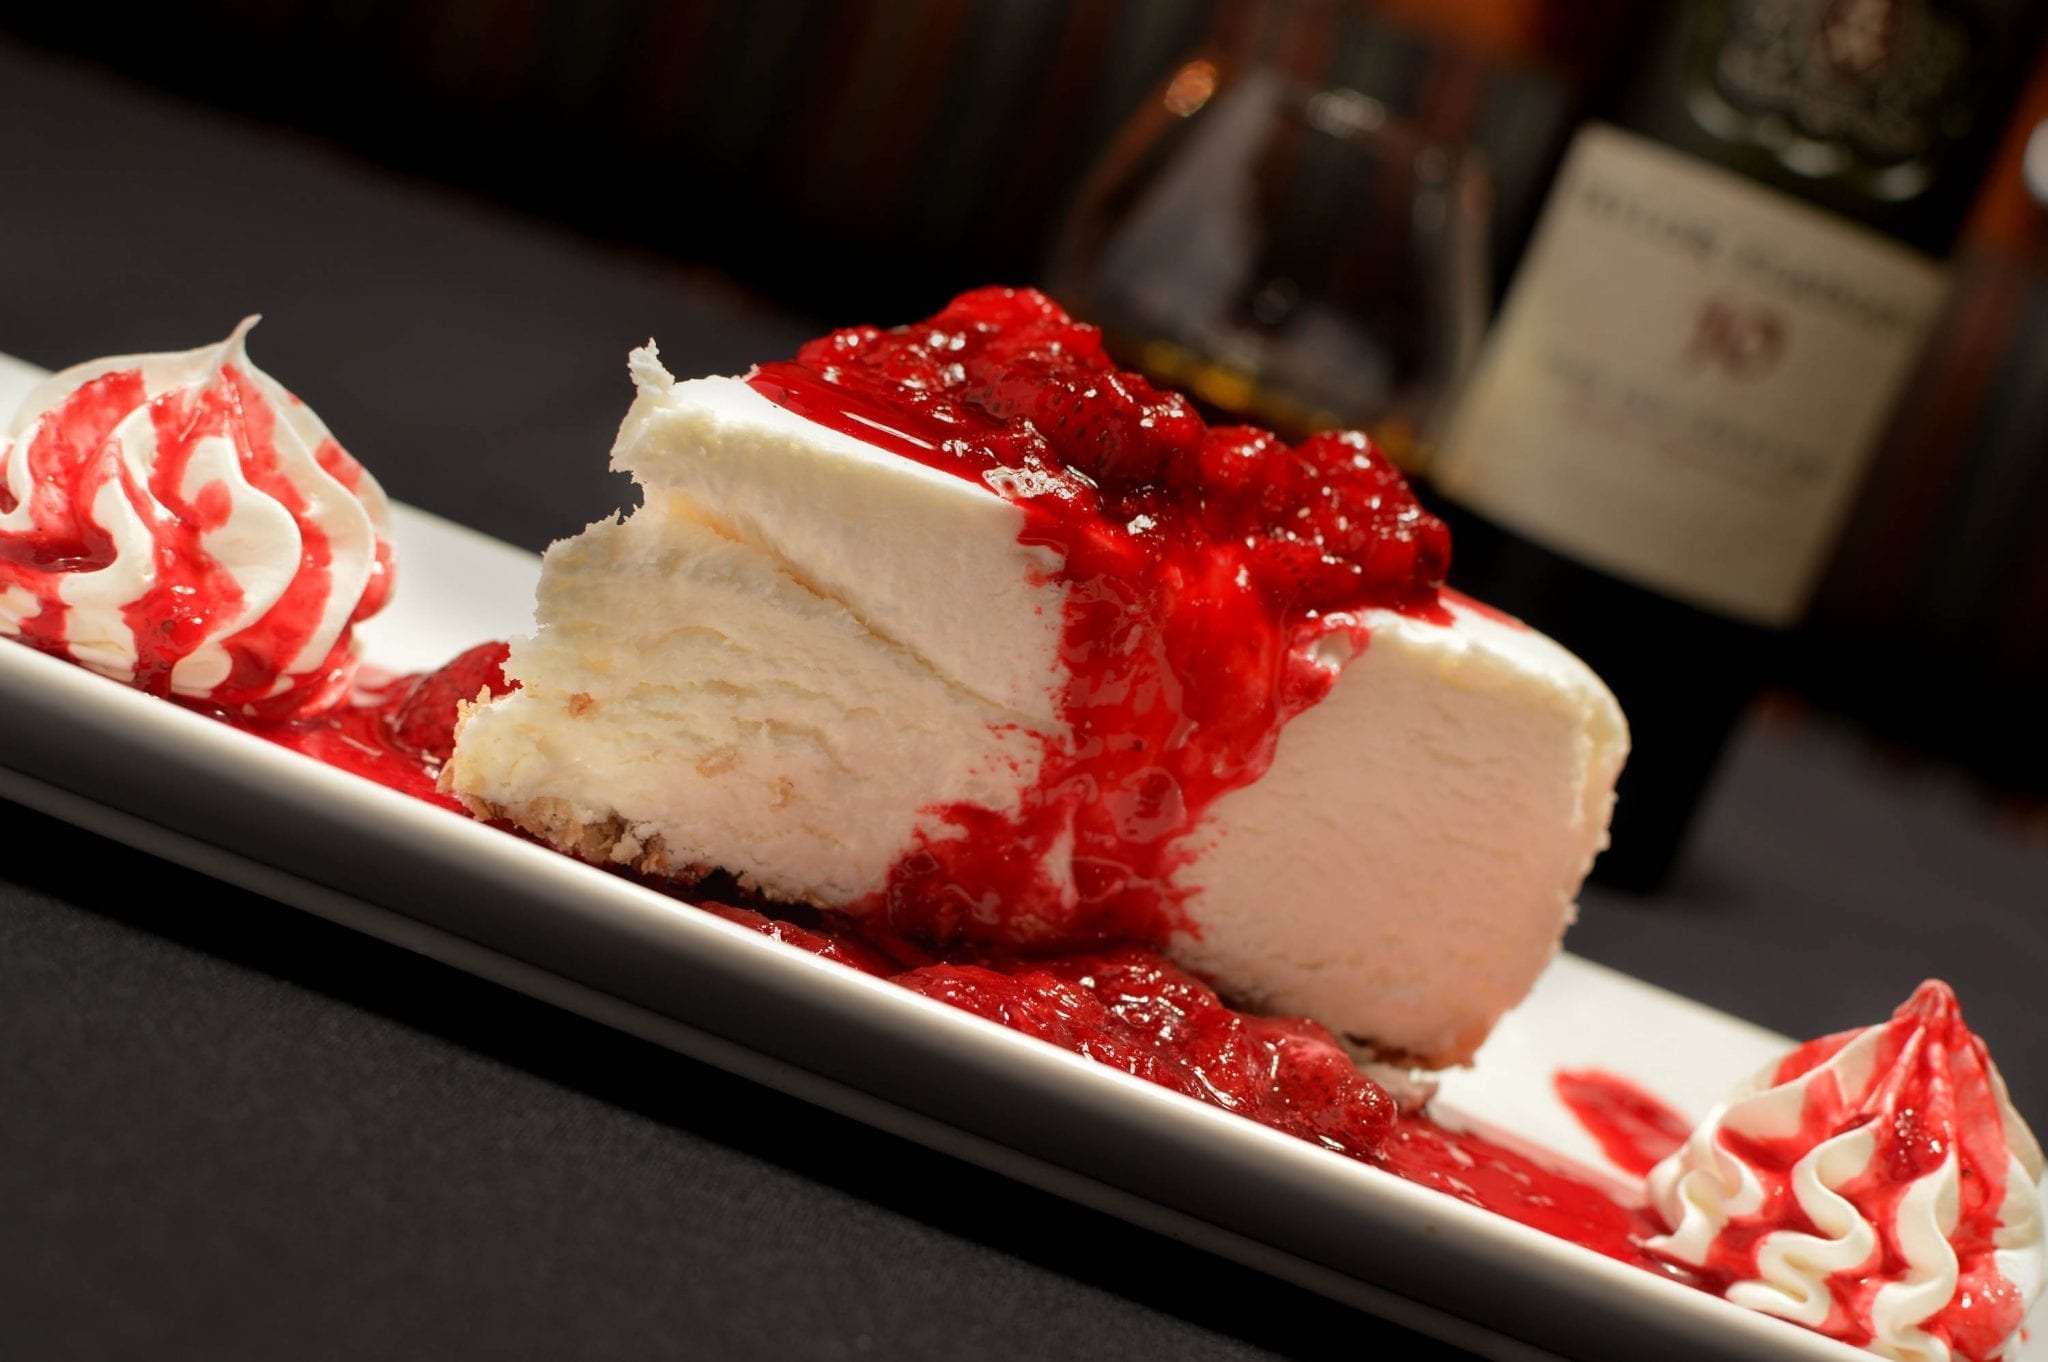 Strawberry cheesecake with whip cream